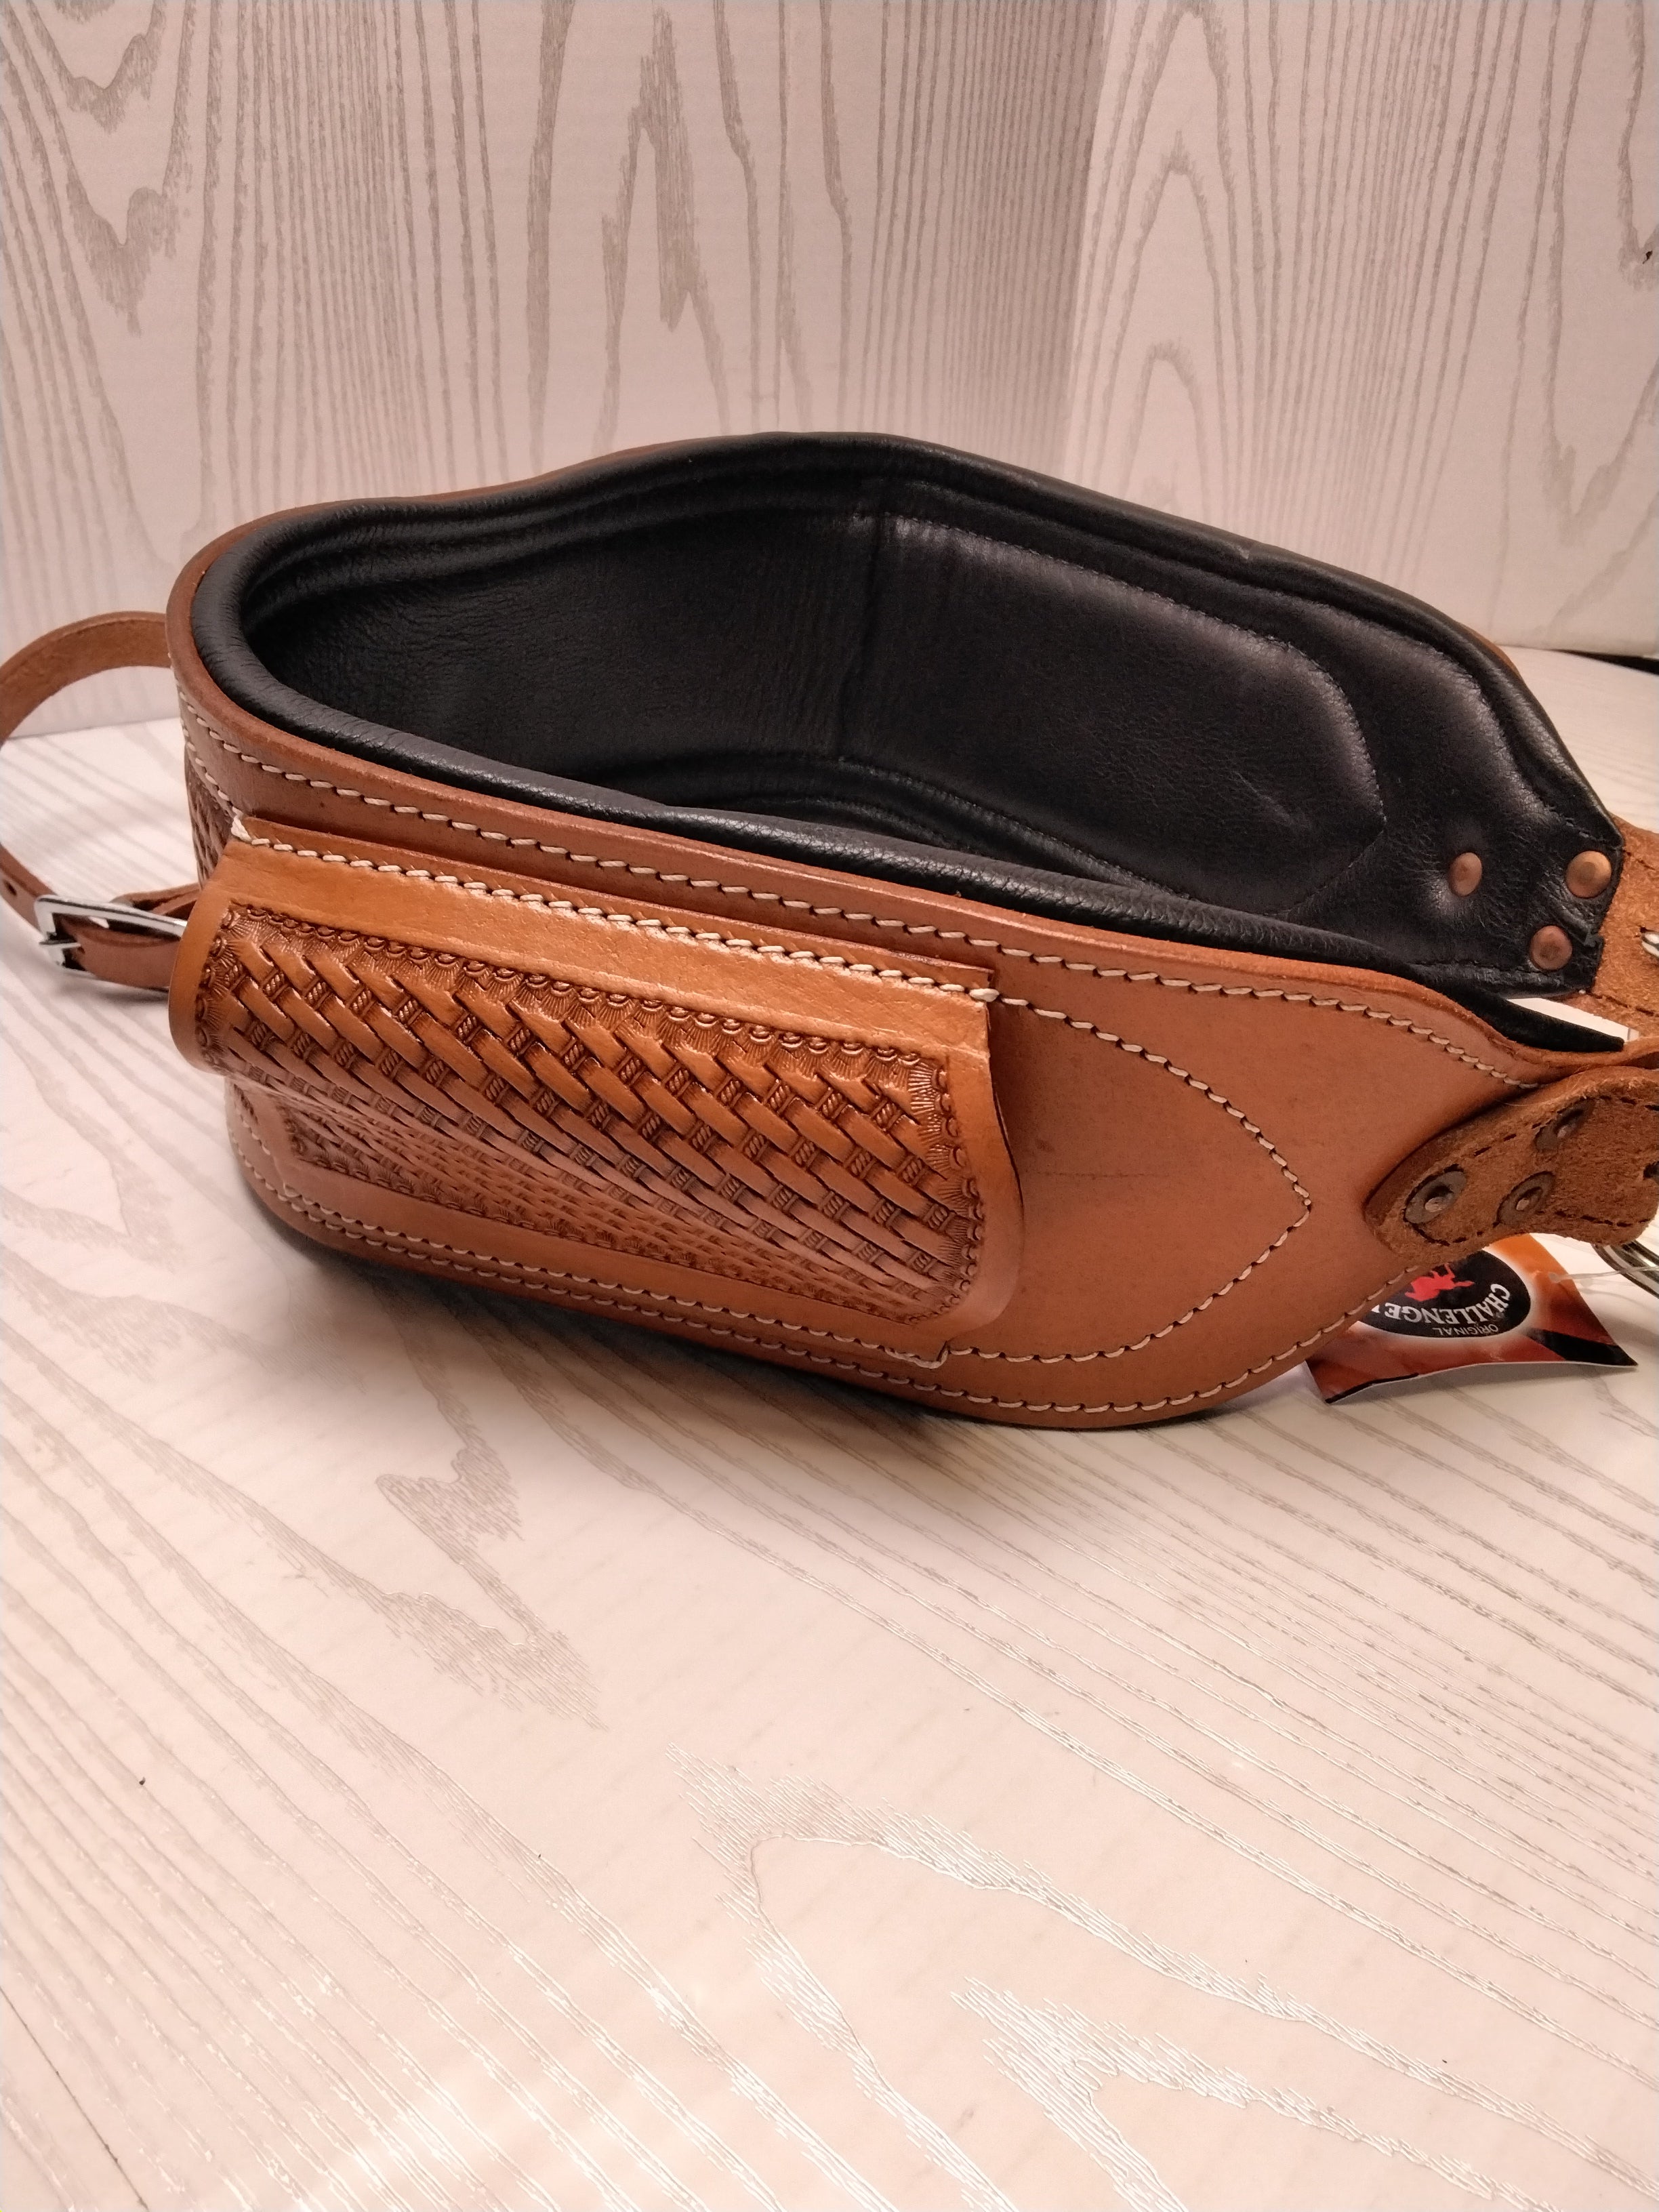 Horse Western Padded Leather Cinch 9782TN- 34 inch, tan (7753051472110)